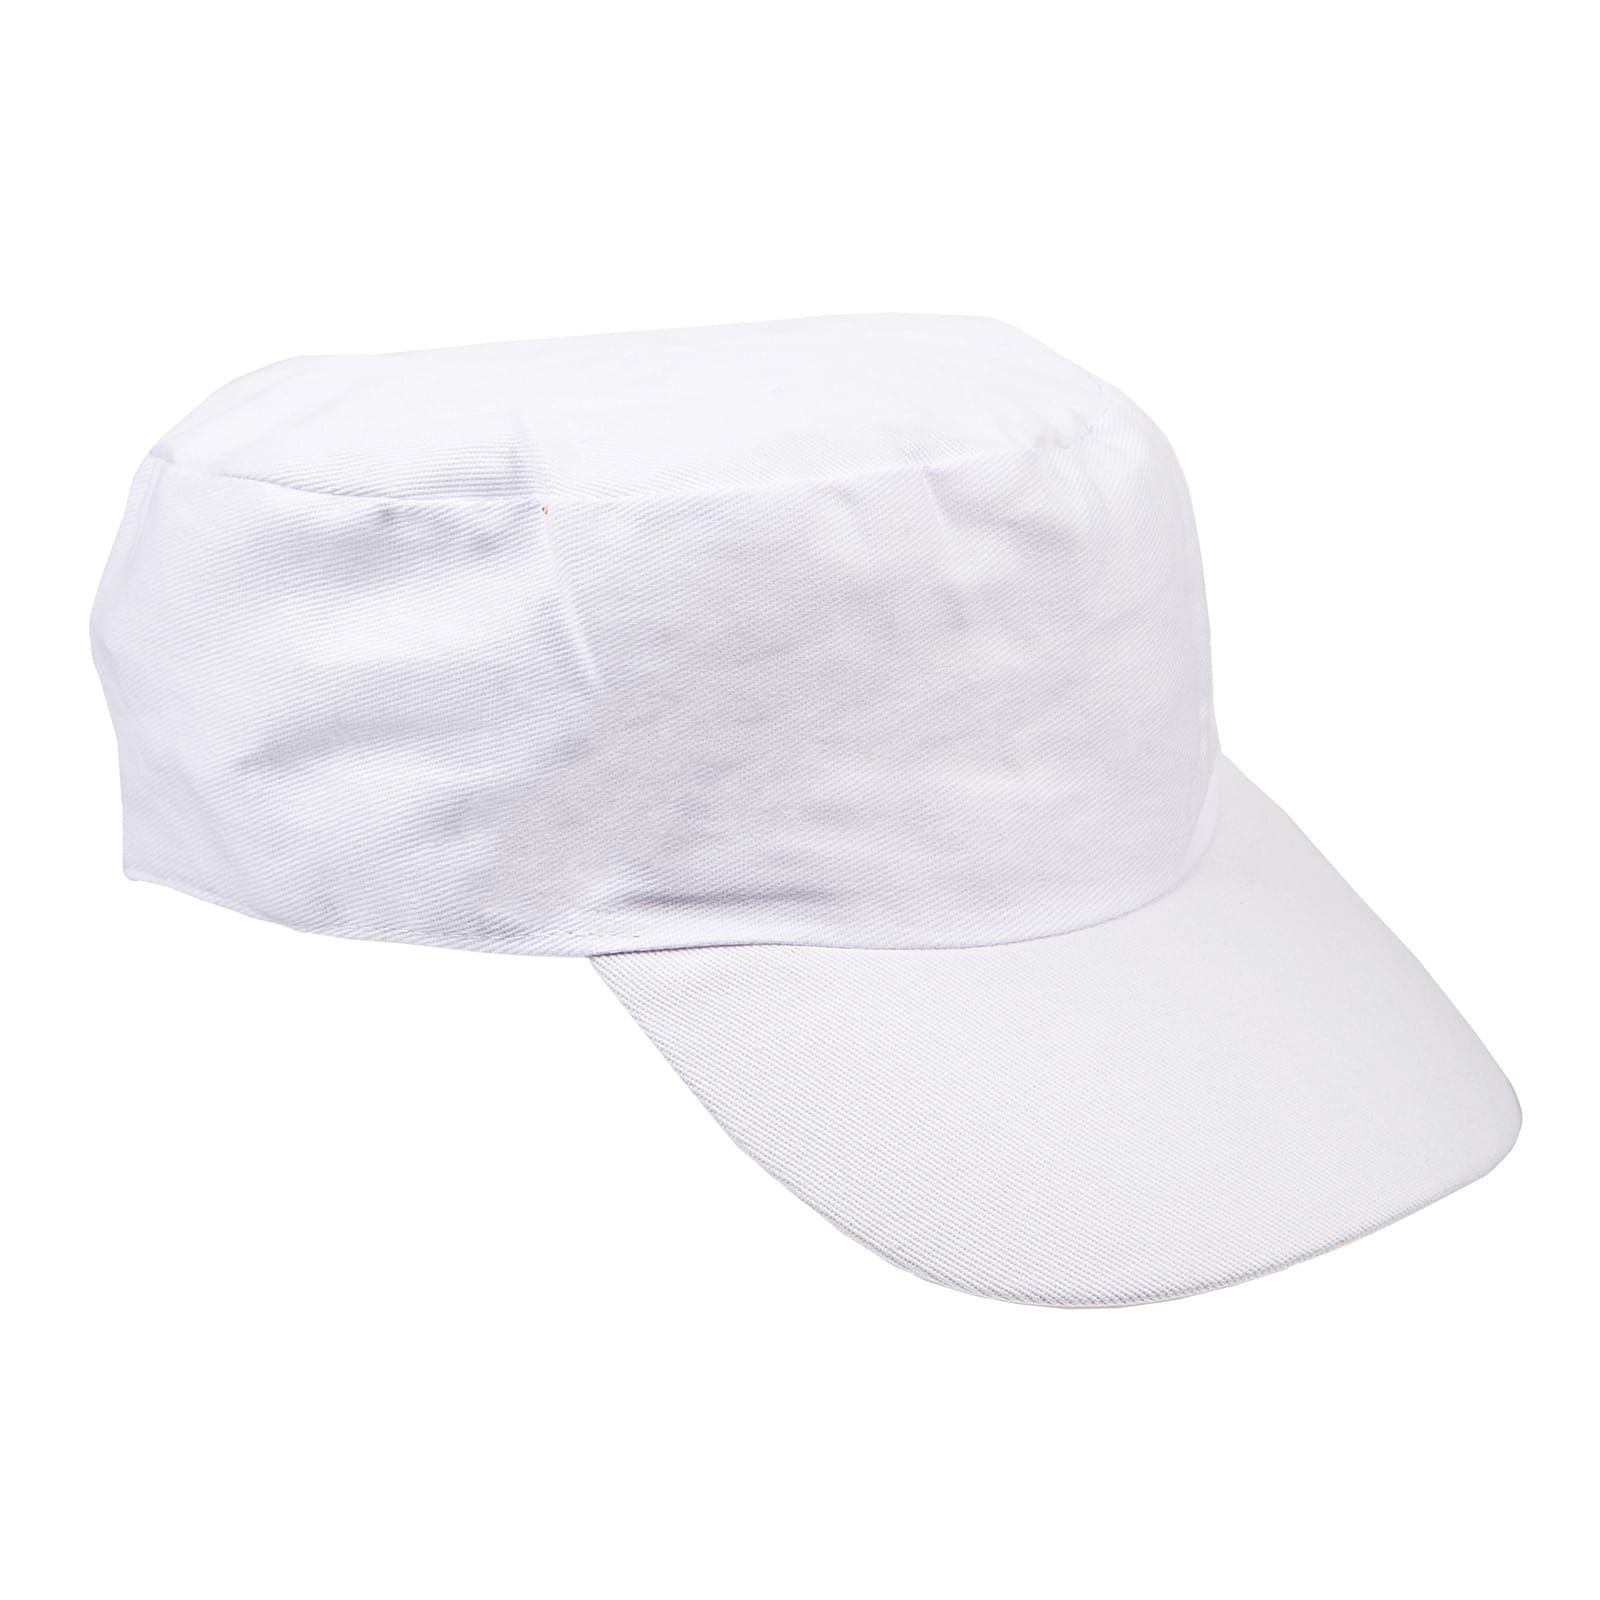 white peaked hat